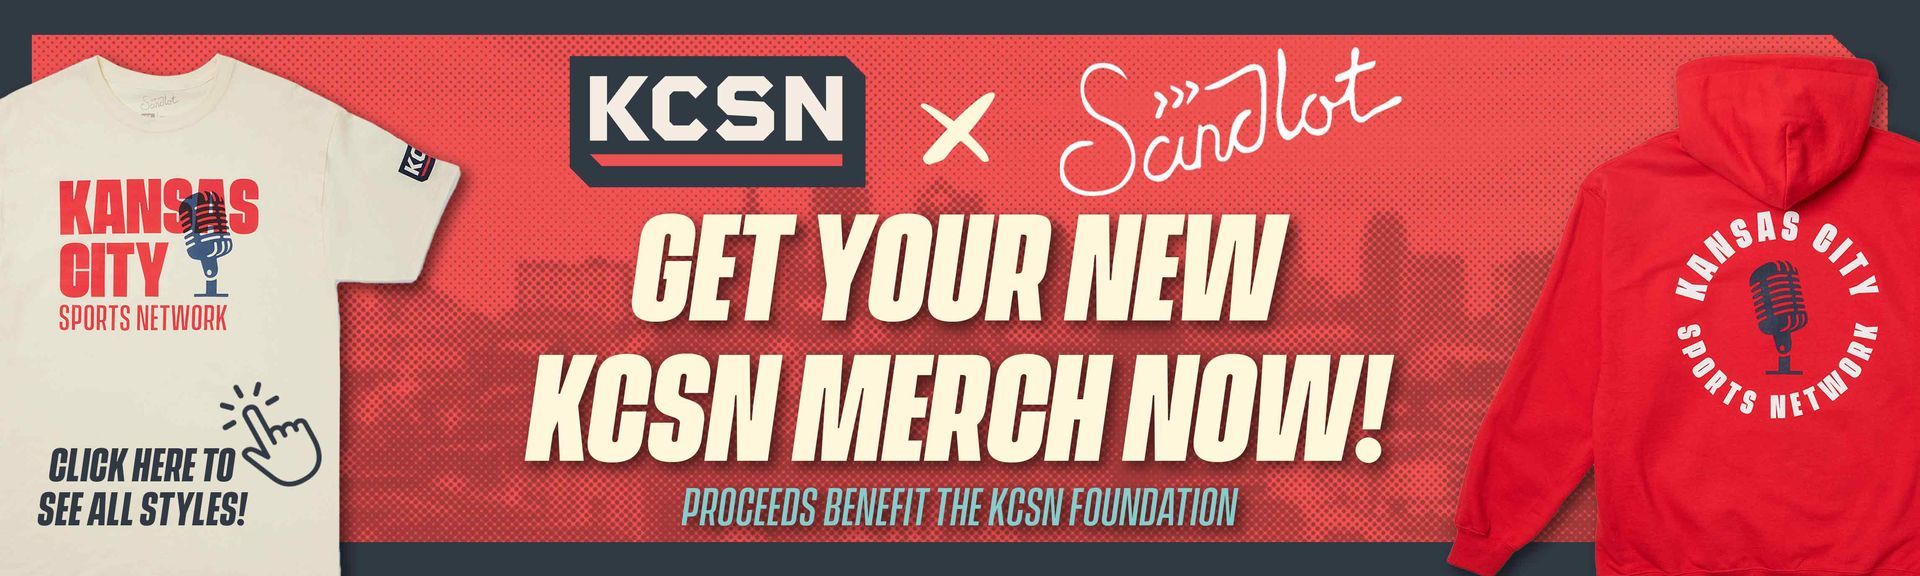 Get your new KCSN merch now. Proceeds benefit the KCSN foundation.